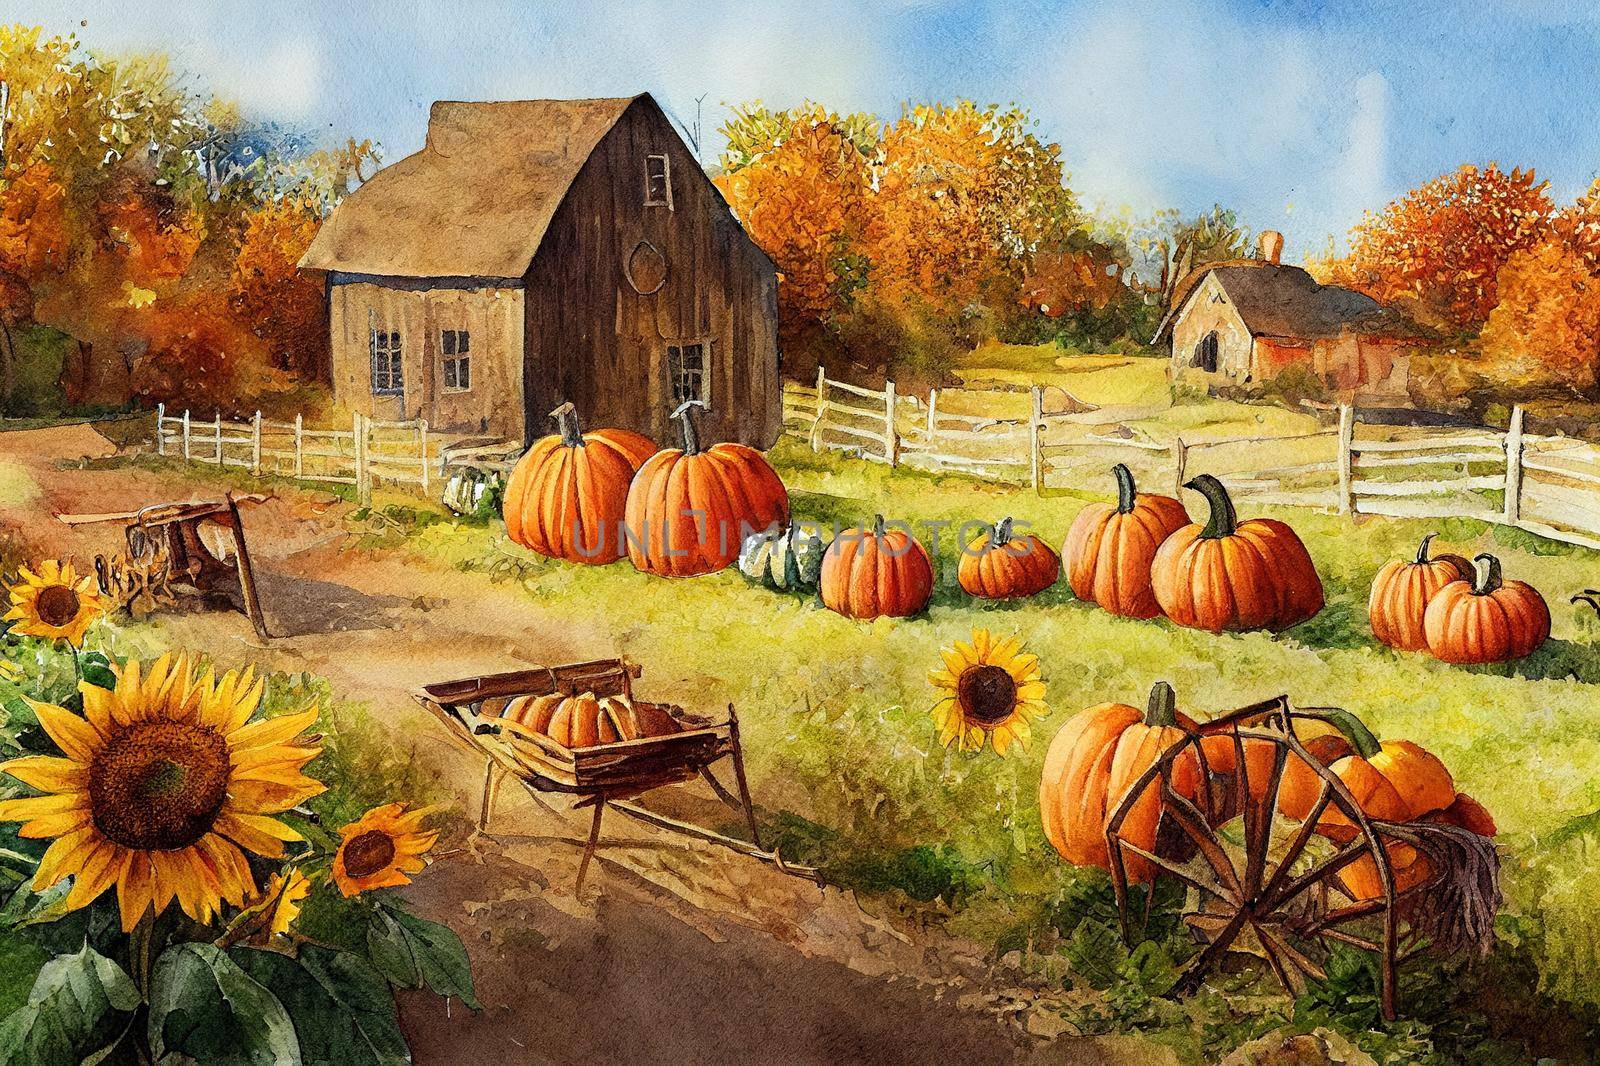 Watercolor farmhouse illustration, Autumn harvest scene with rustic wheelbarrow, by 2ragon